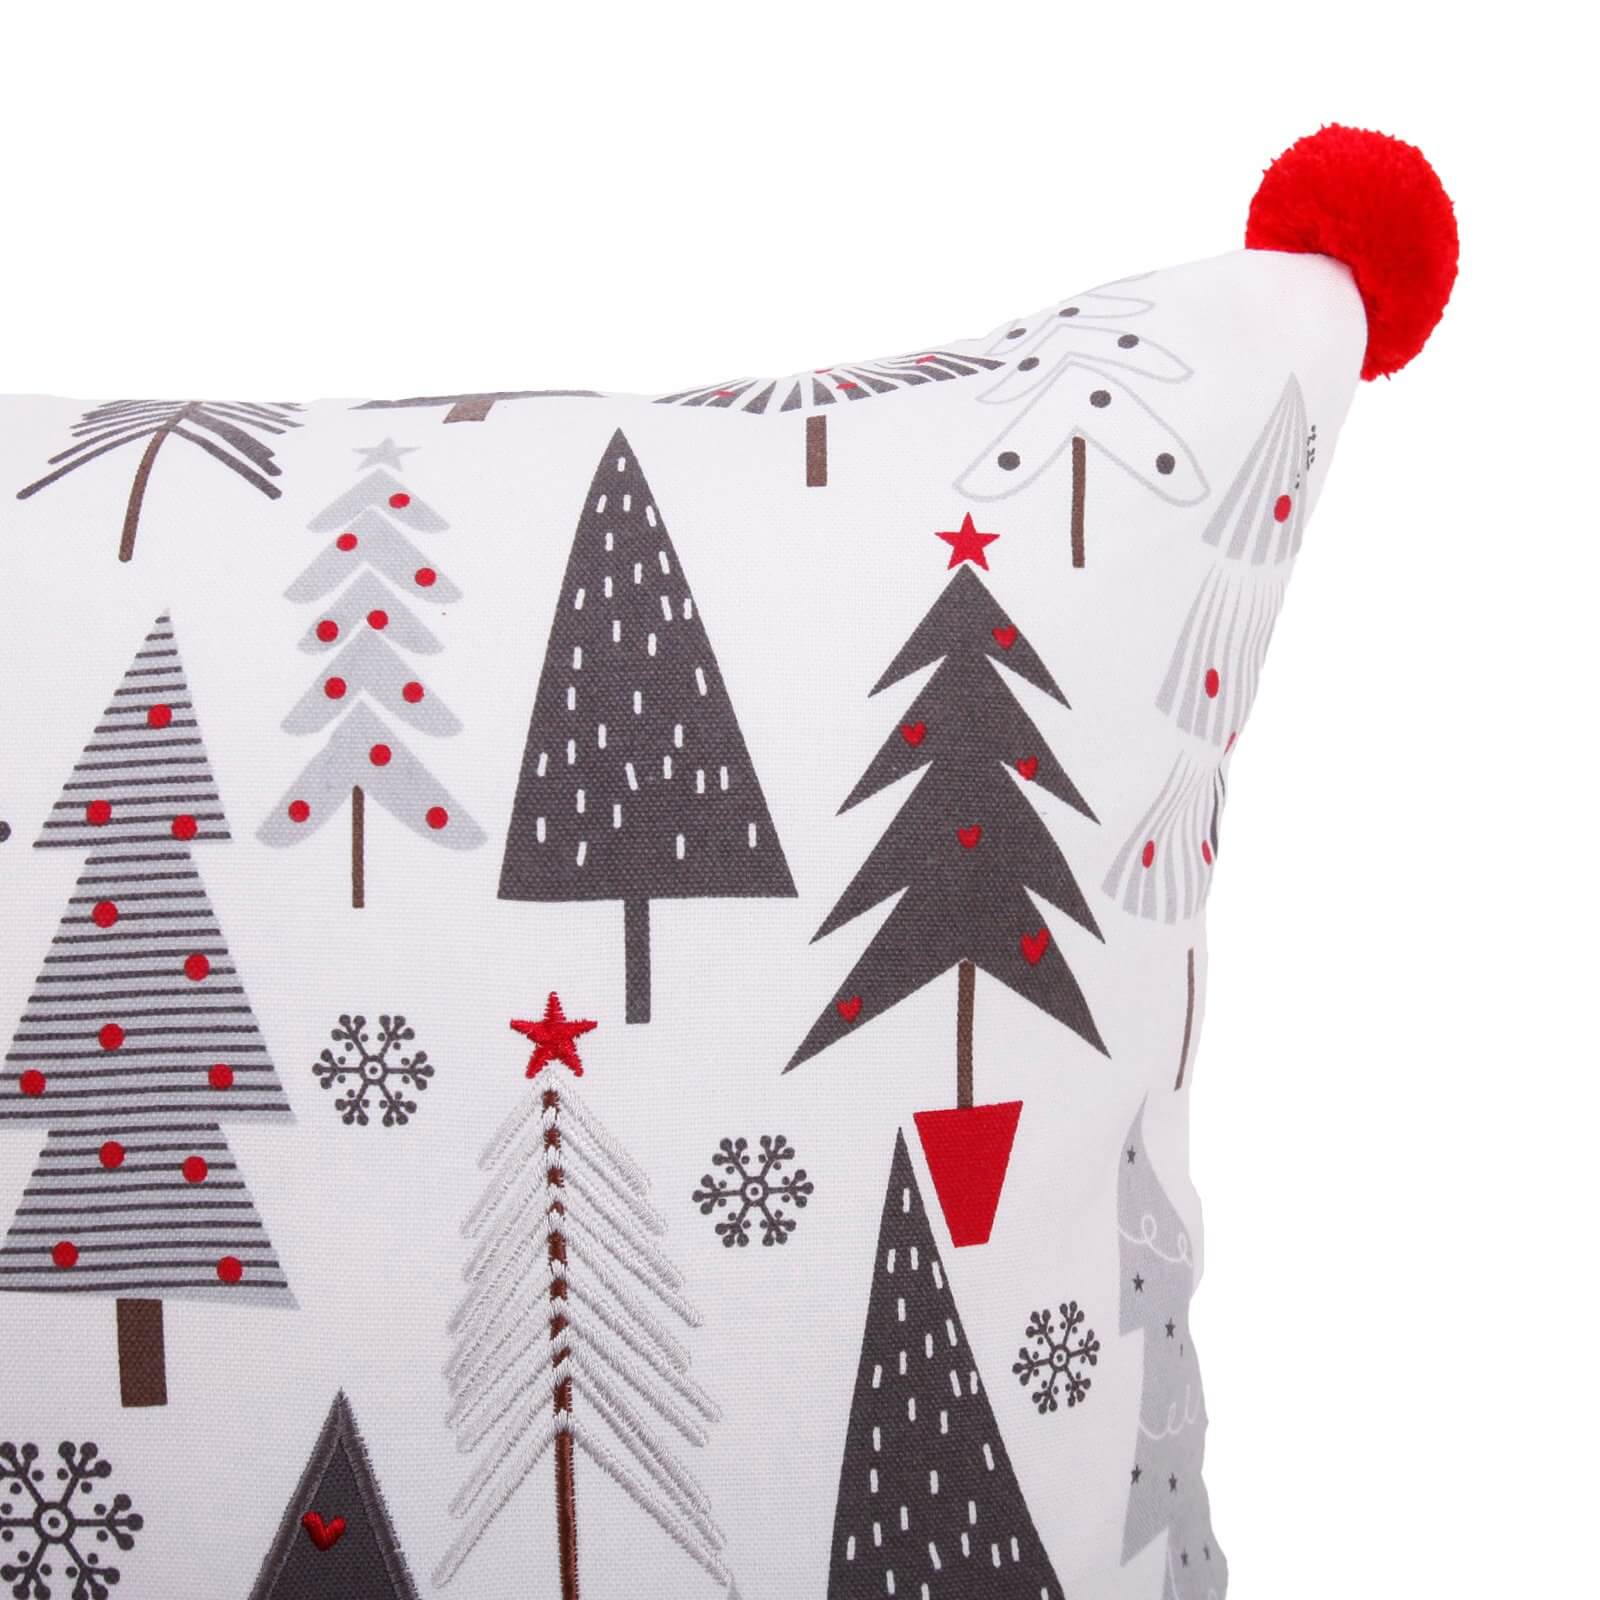 Christmas Tree Cushion Cushion 45 x 45cm